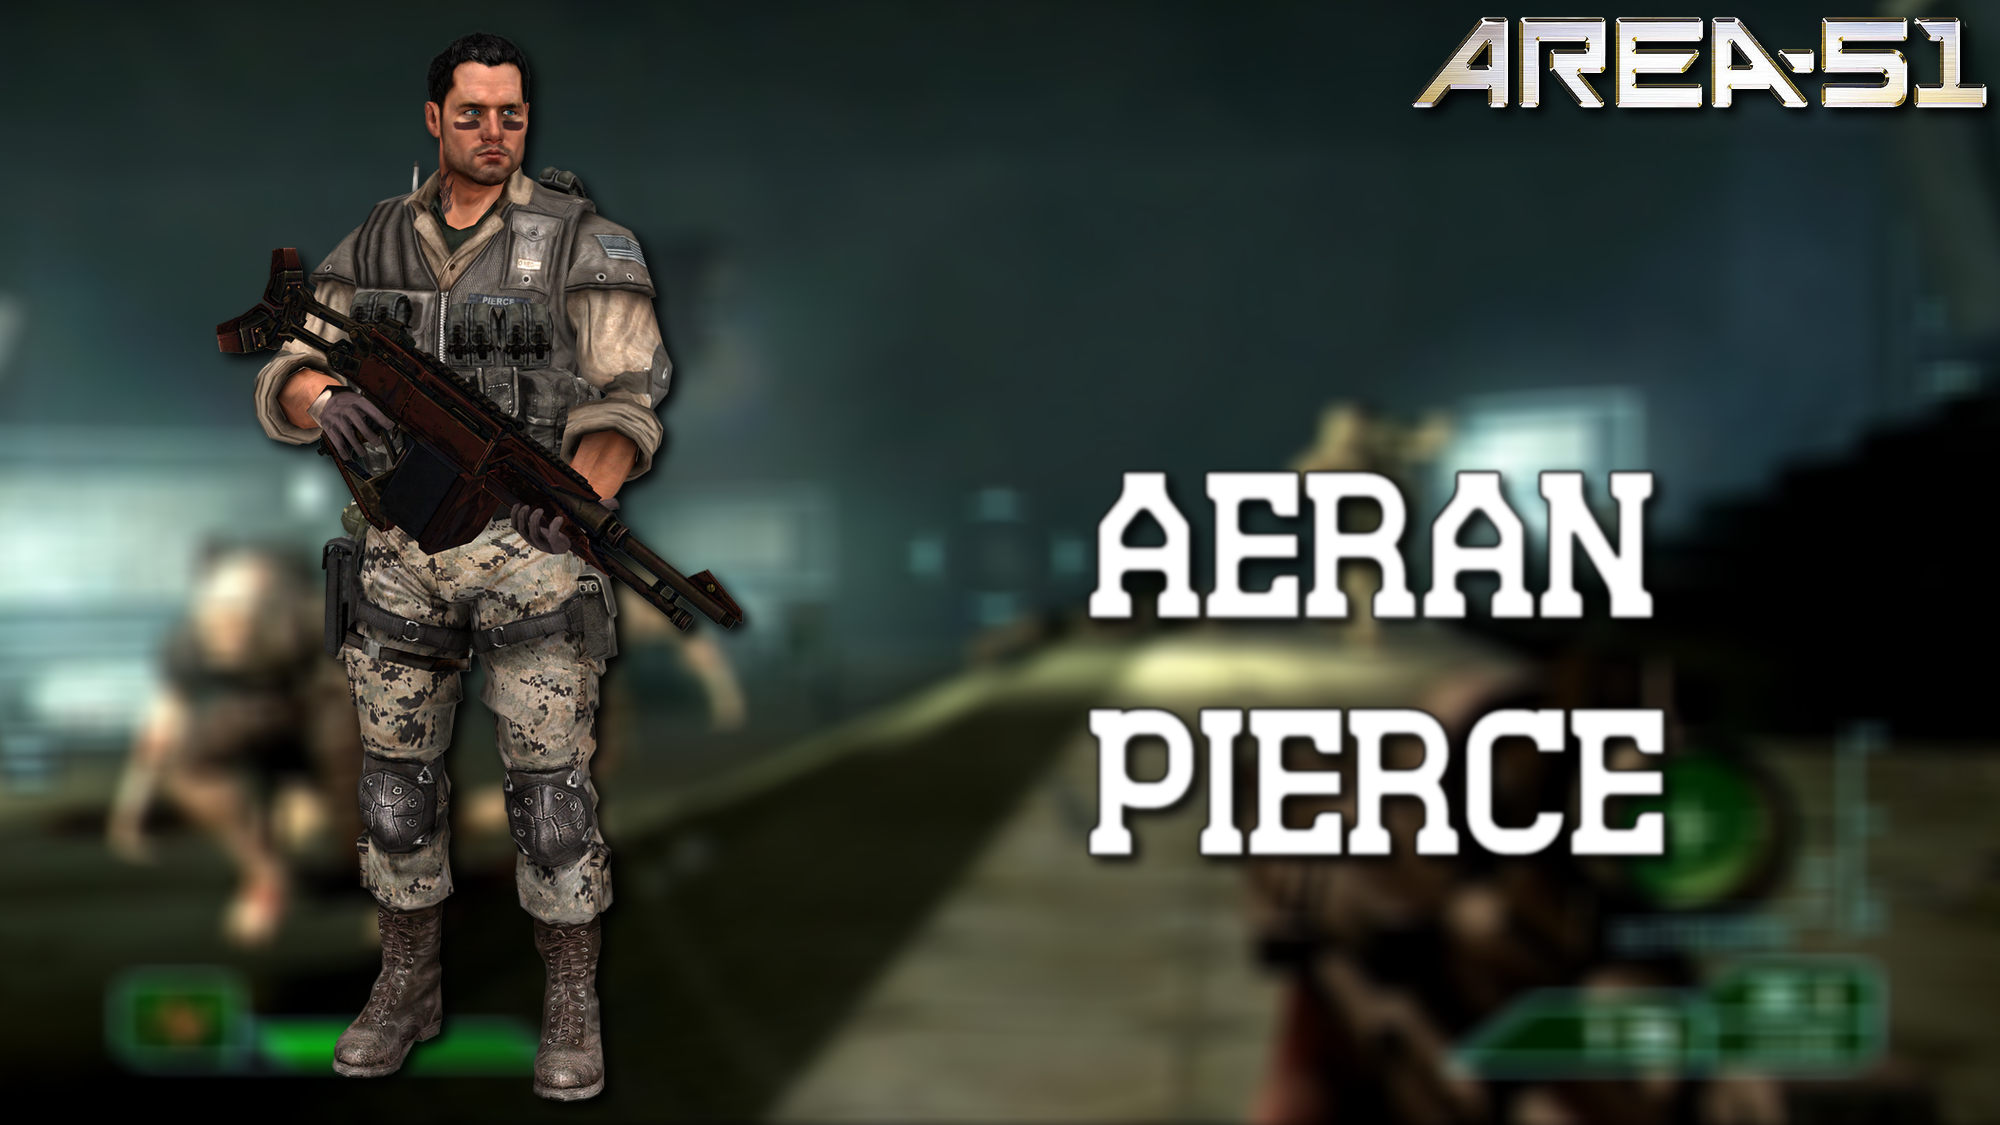 BlackSite: Area 51 Download (2007 Arcade action Game)